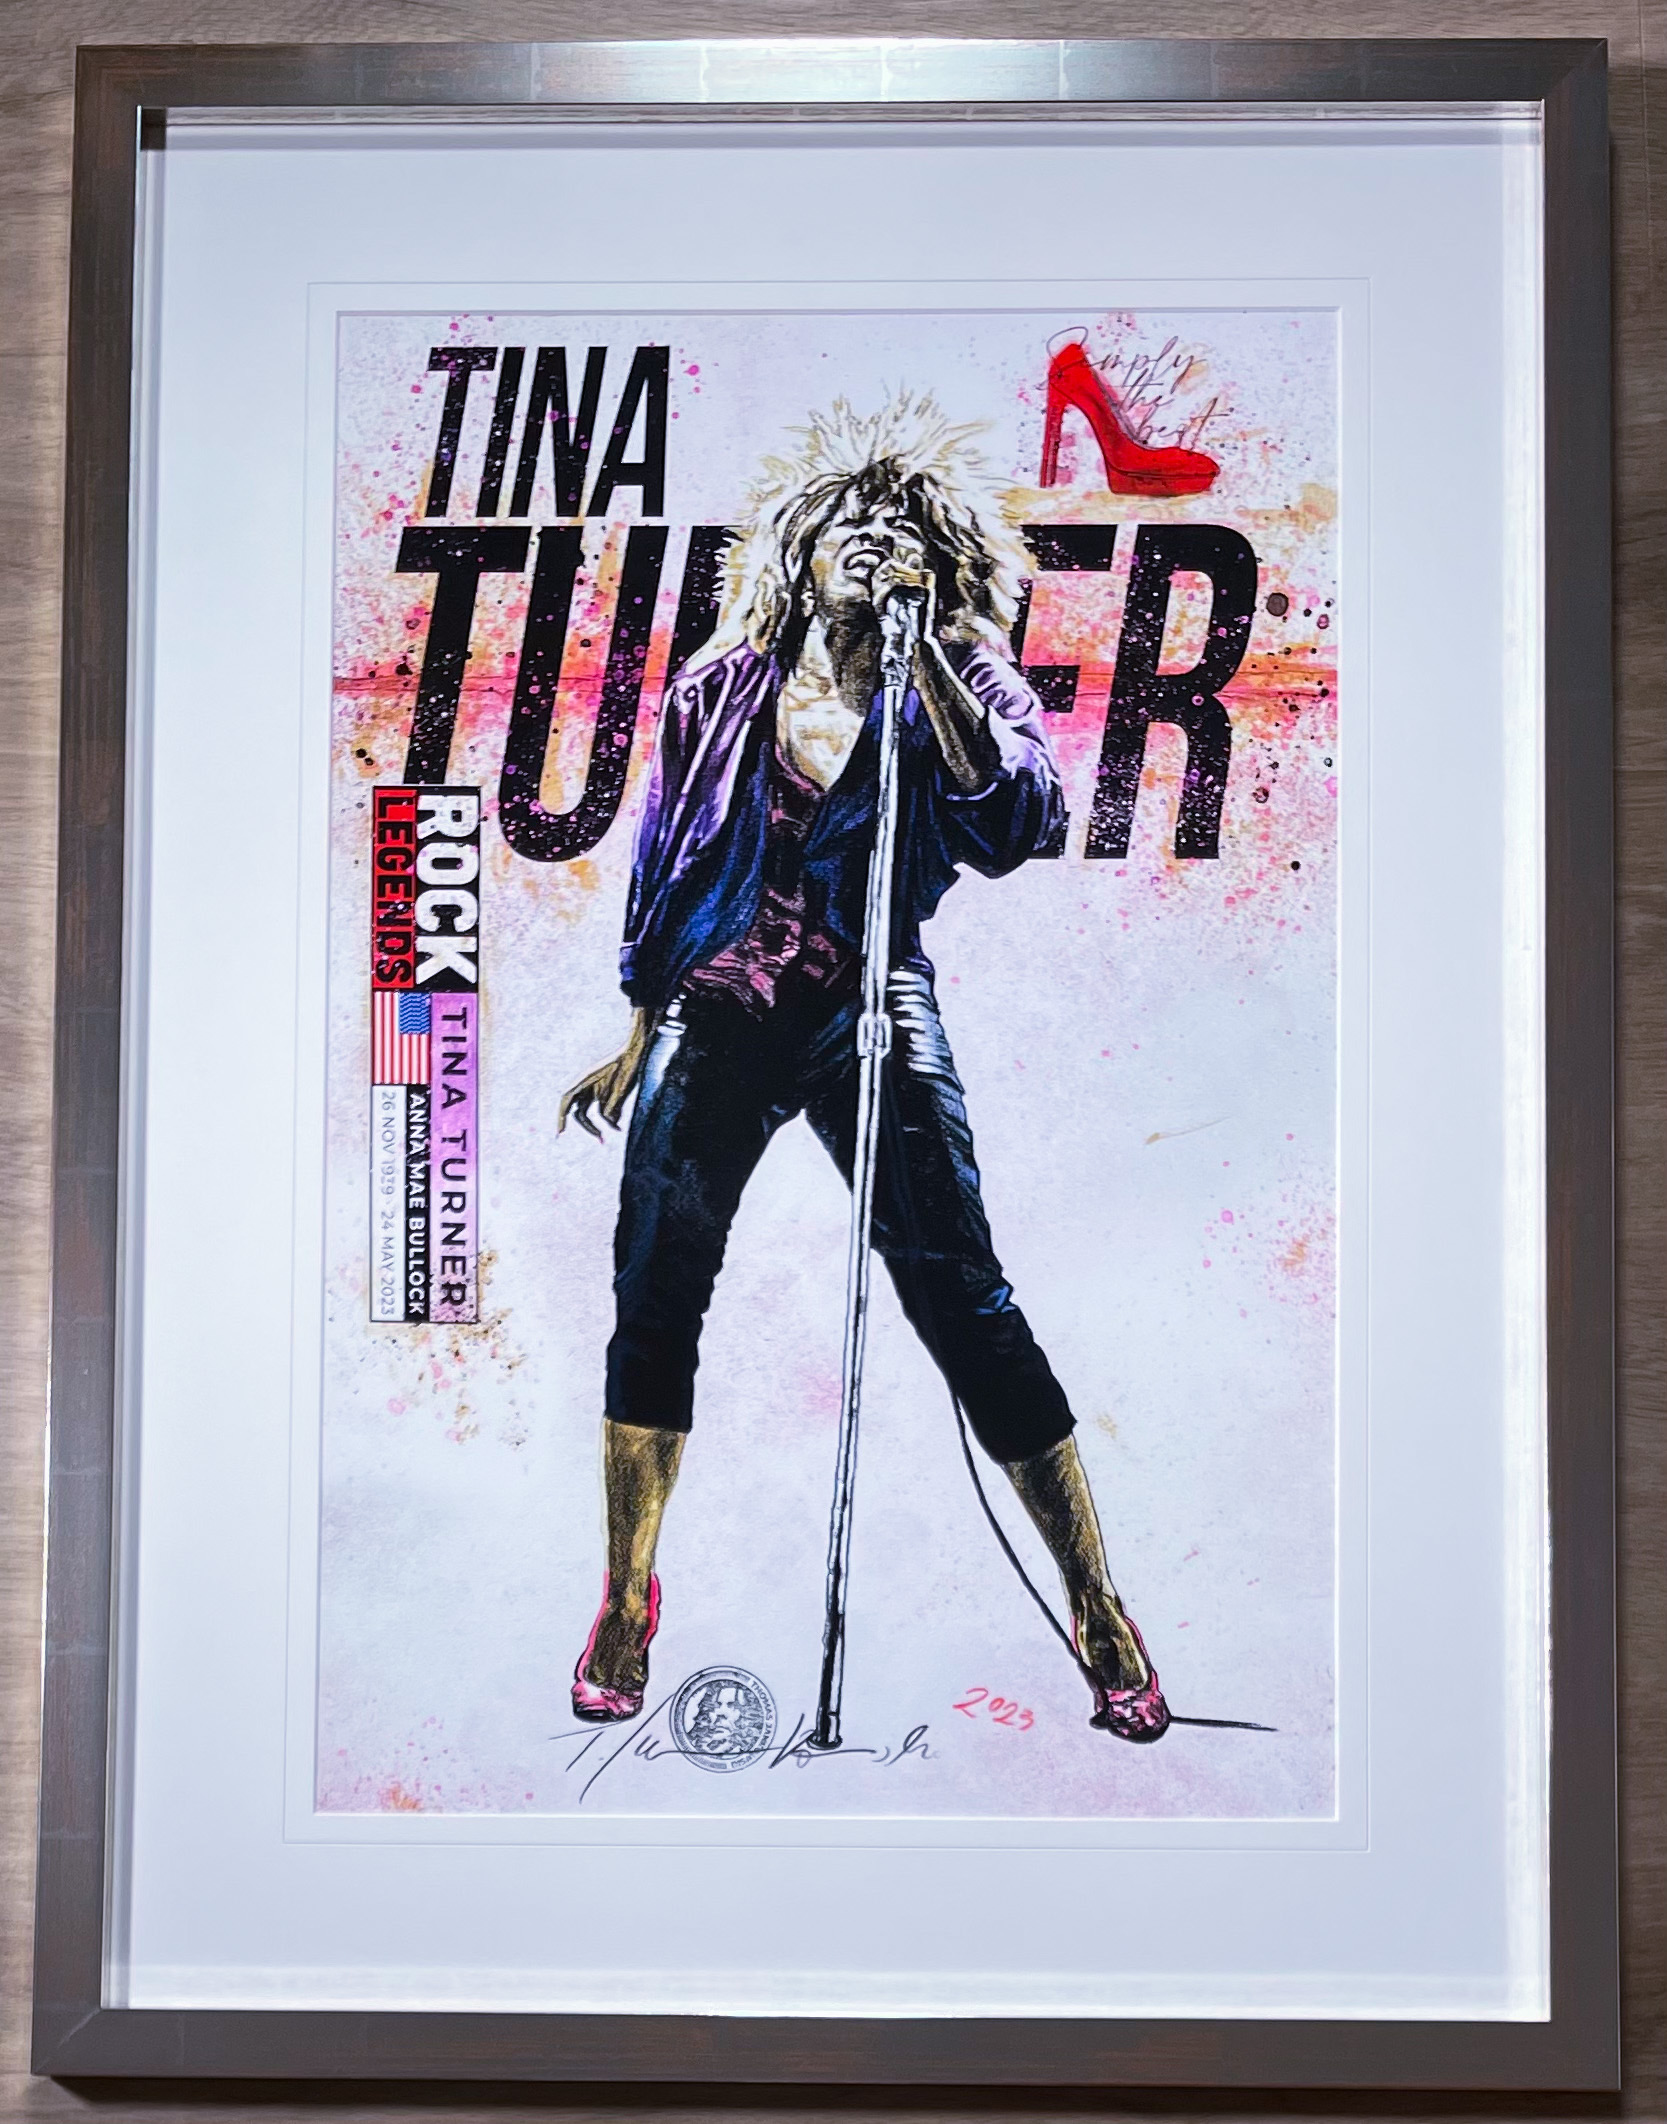 Thomas Jankowski "Tina Turner - UNIKAT"